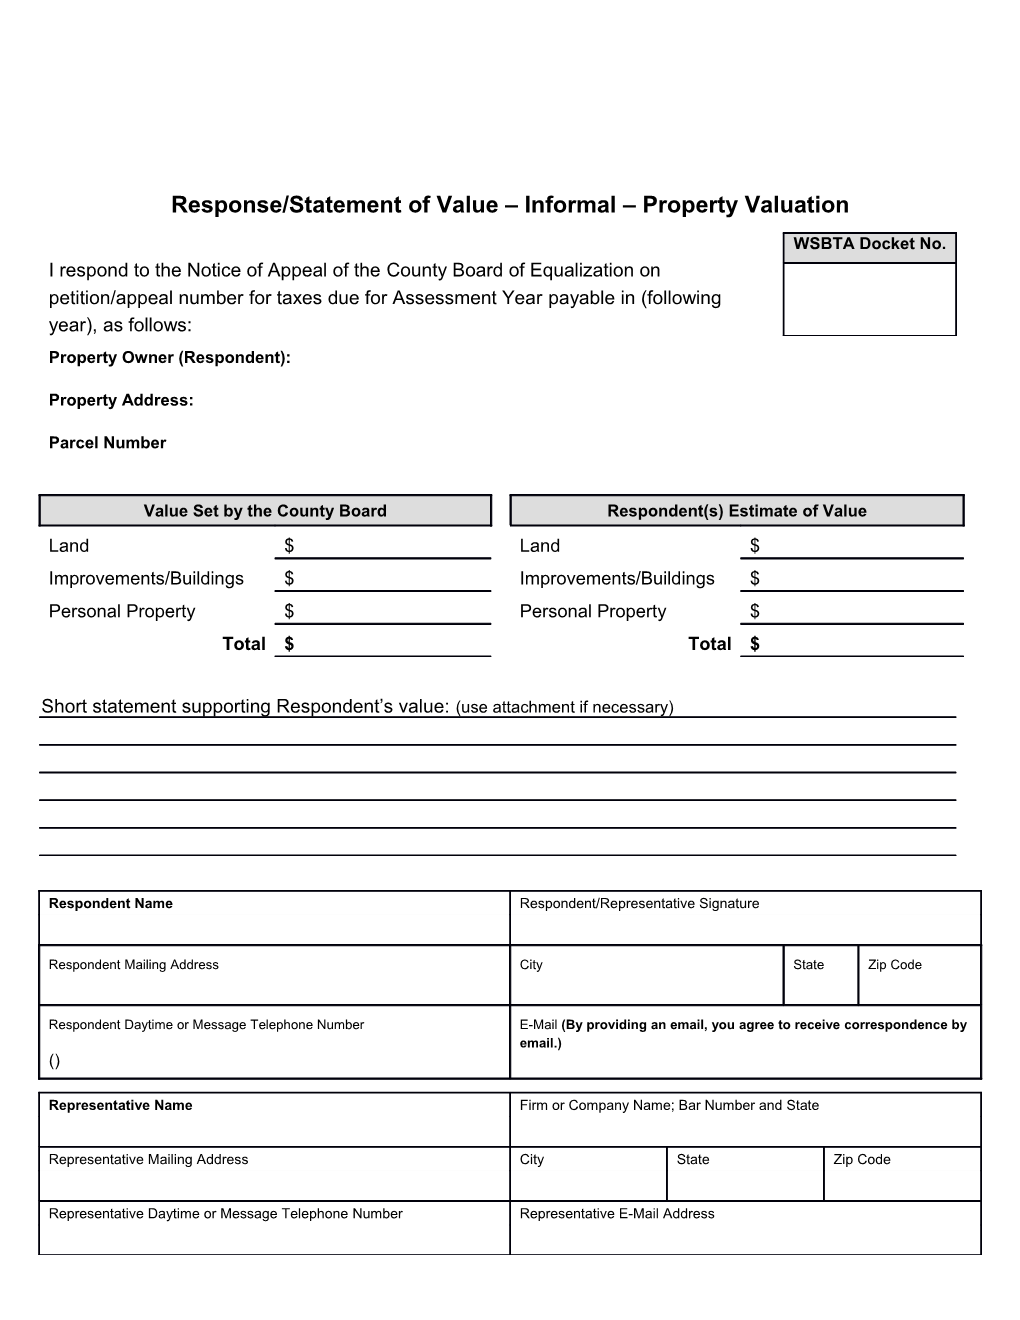 Response/Statement of Value Informal Property Valuation